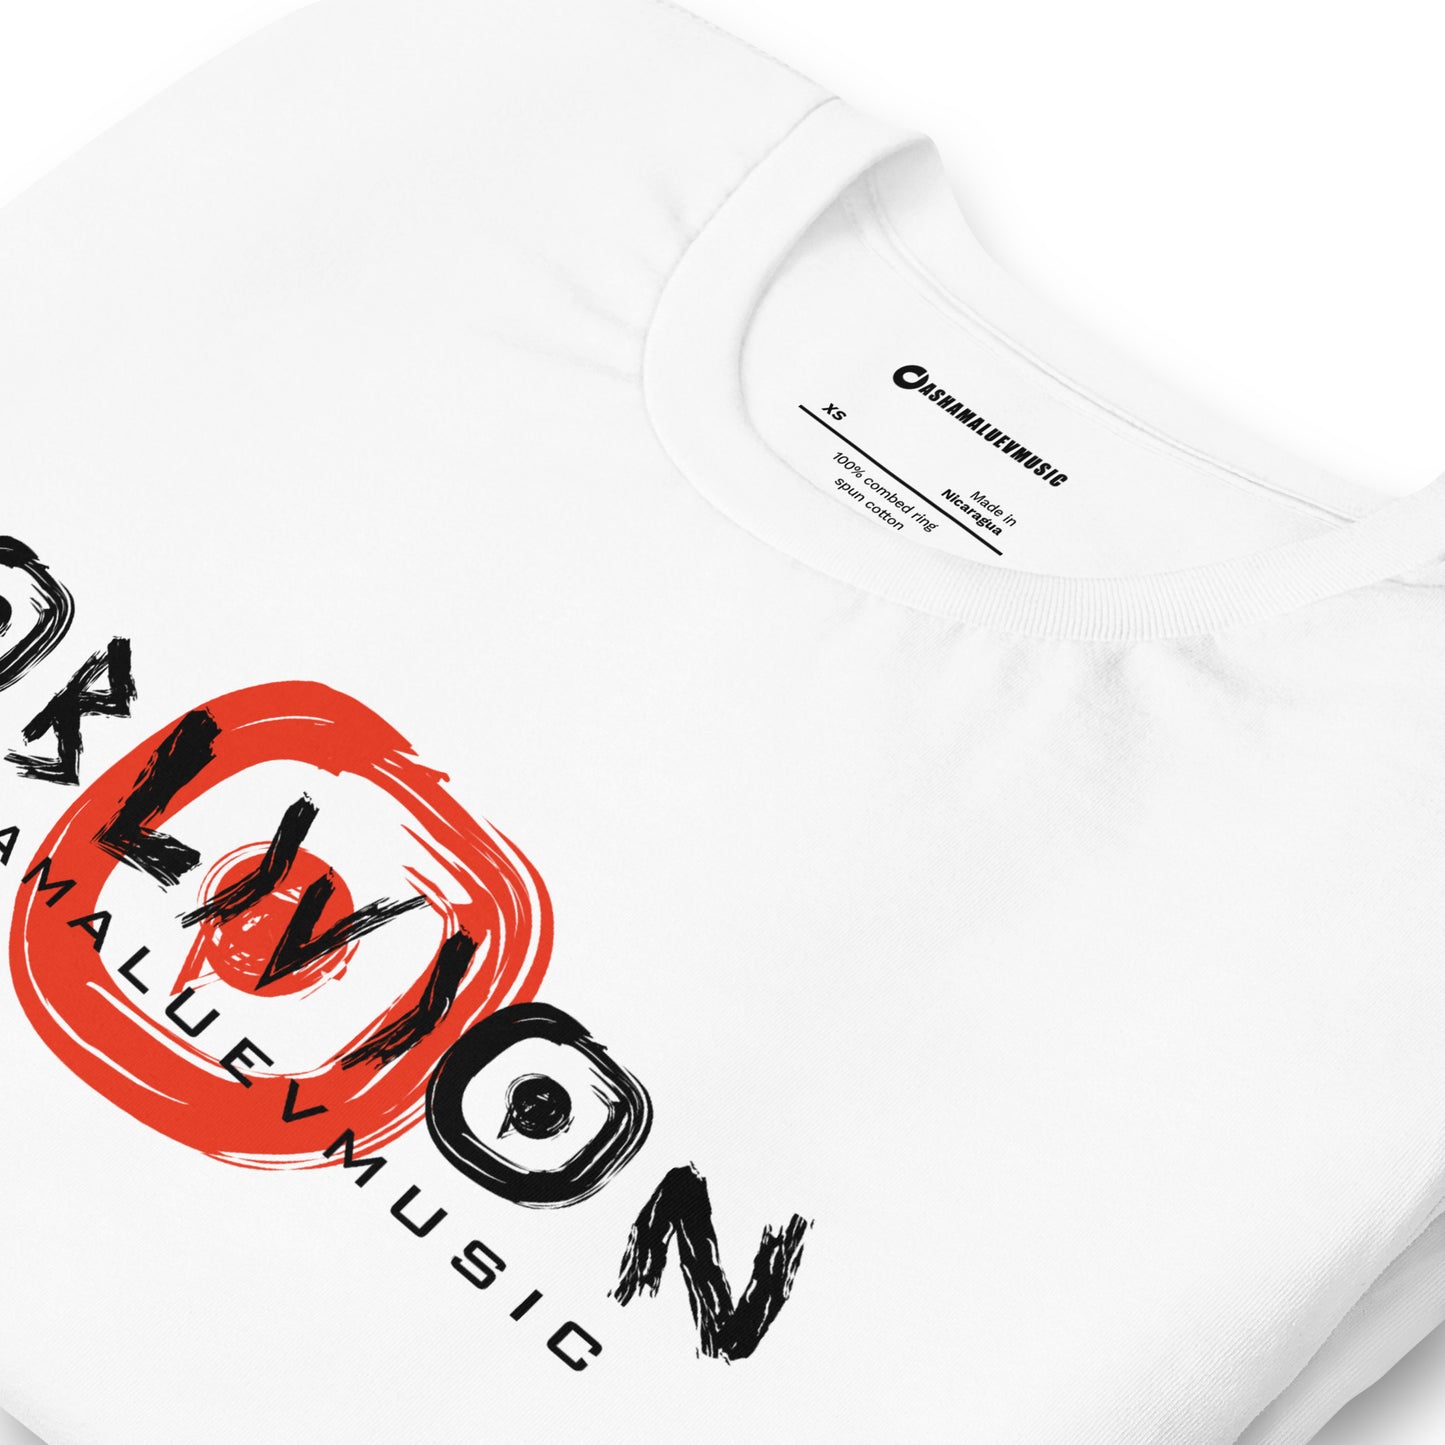 T-shirt "Oblivion" IV